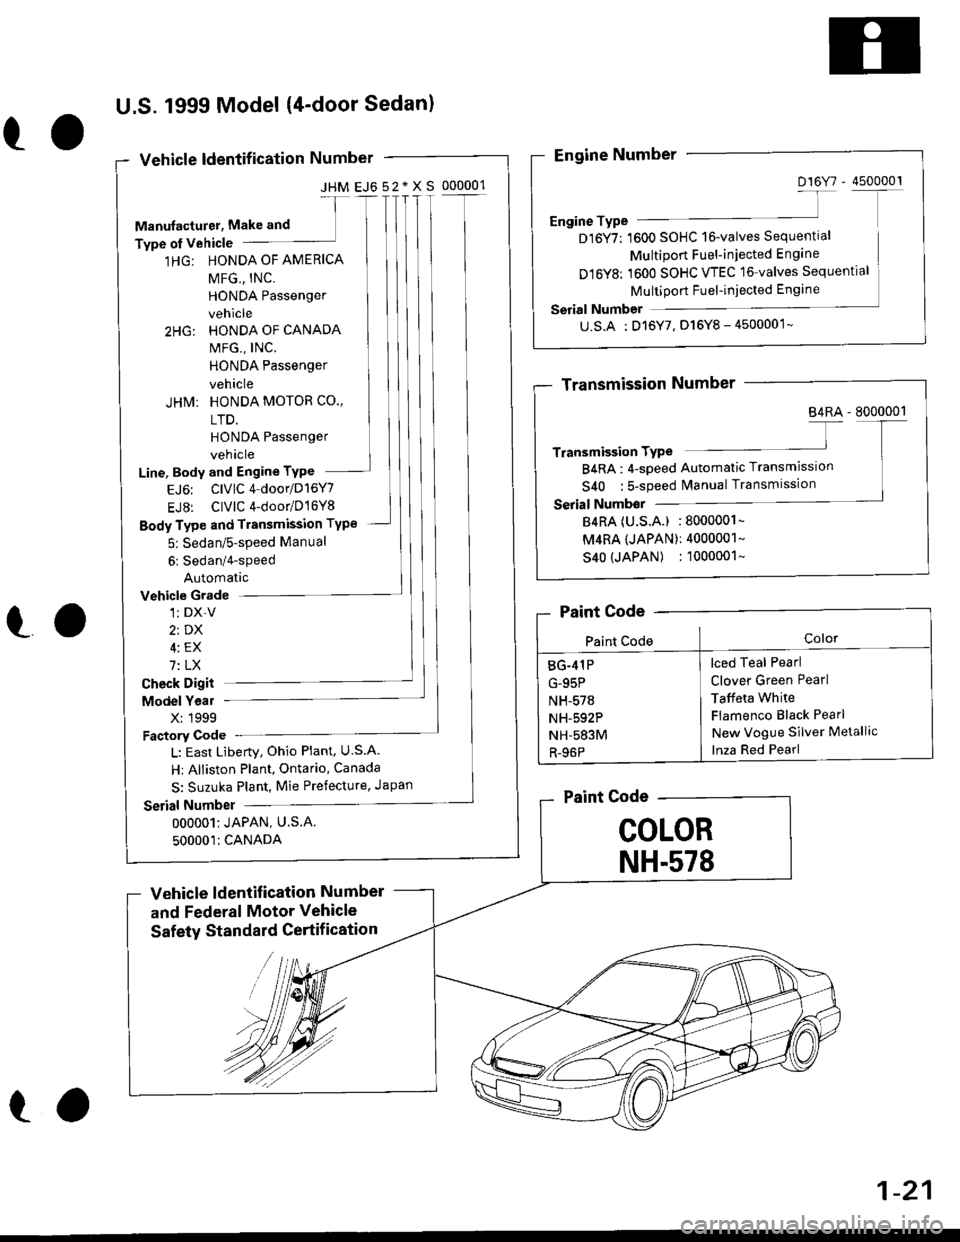 HONDA CIVIC 1997 6.G User Guide ro
U.S. 1999 Model (4door Sedan)
Vehicle ldentif ication Number
JHM EJ652*XS 000001-f
Manufacturel, Make and
Type ol vehicle
1HG: HONDA OF AMERICA
Vehicle Gradel: DX-V
2t DX
4: EX
7: LX
HONDA Passen